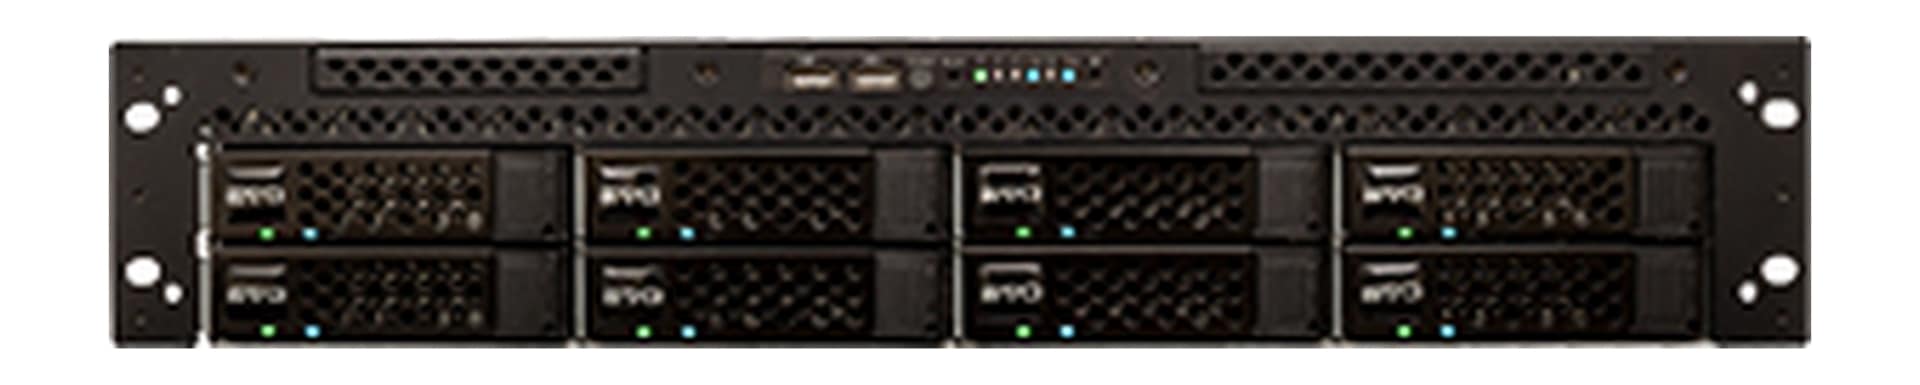 SNS EVO 2U 8 Bay Shared Storage Server with 96TB Raw Capacity Hard Drive